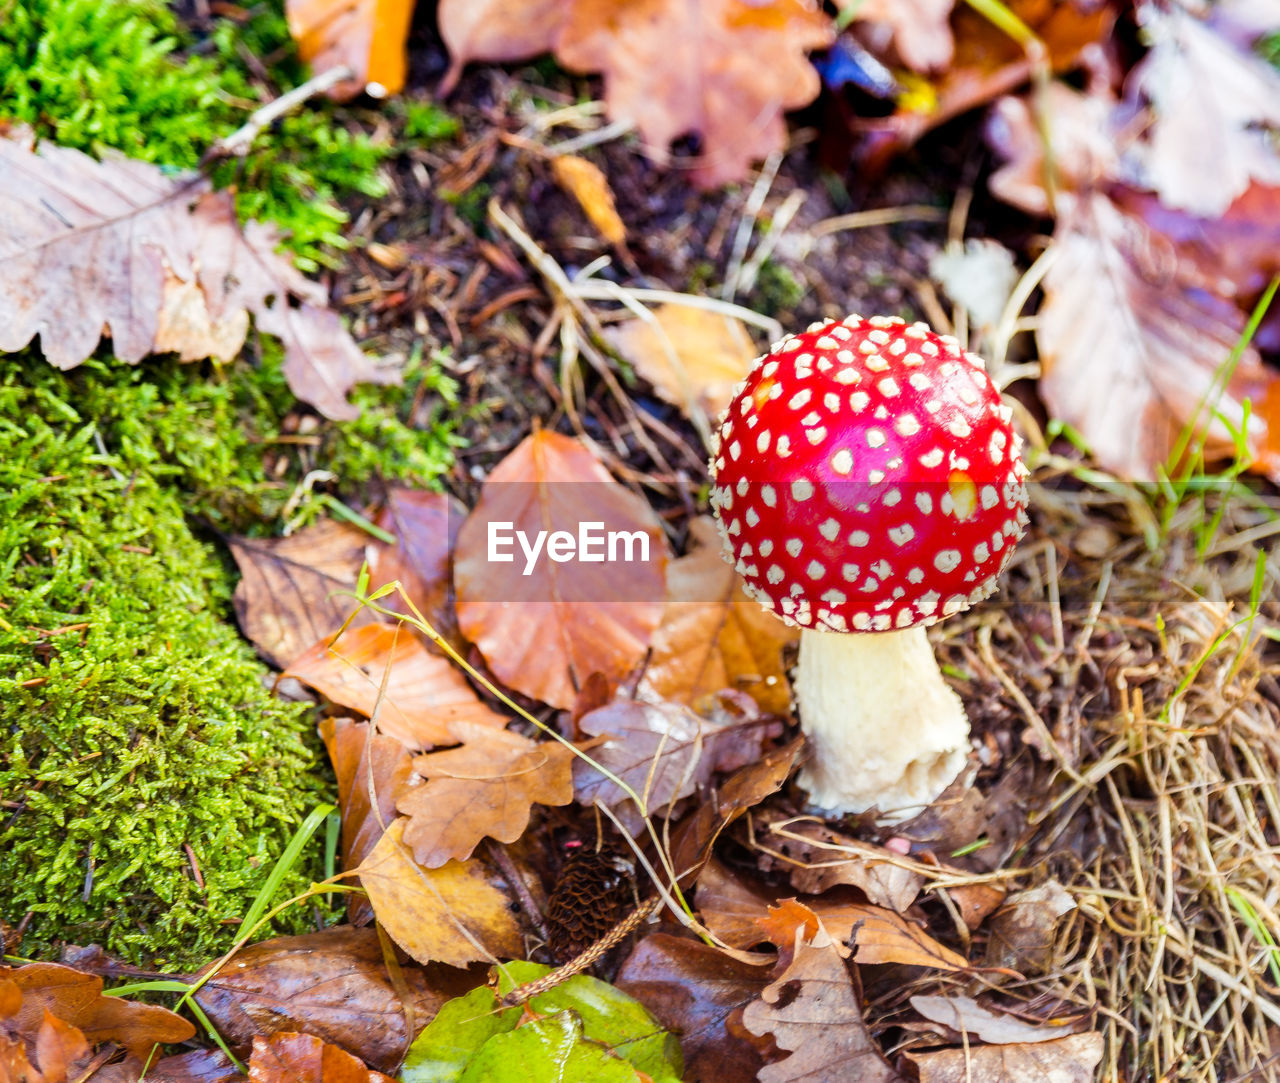 Close-up high angle view of mushroom on ground